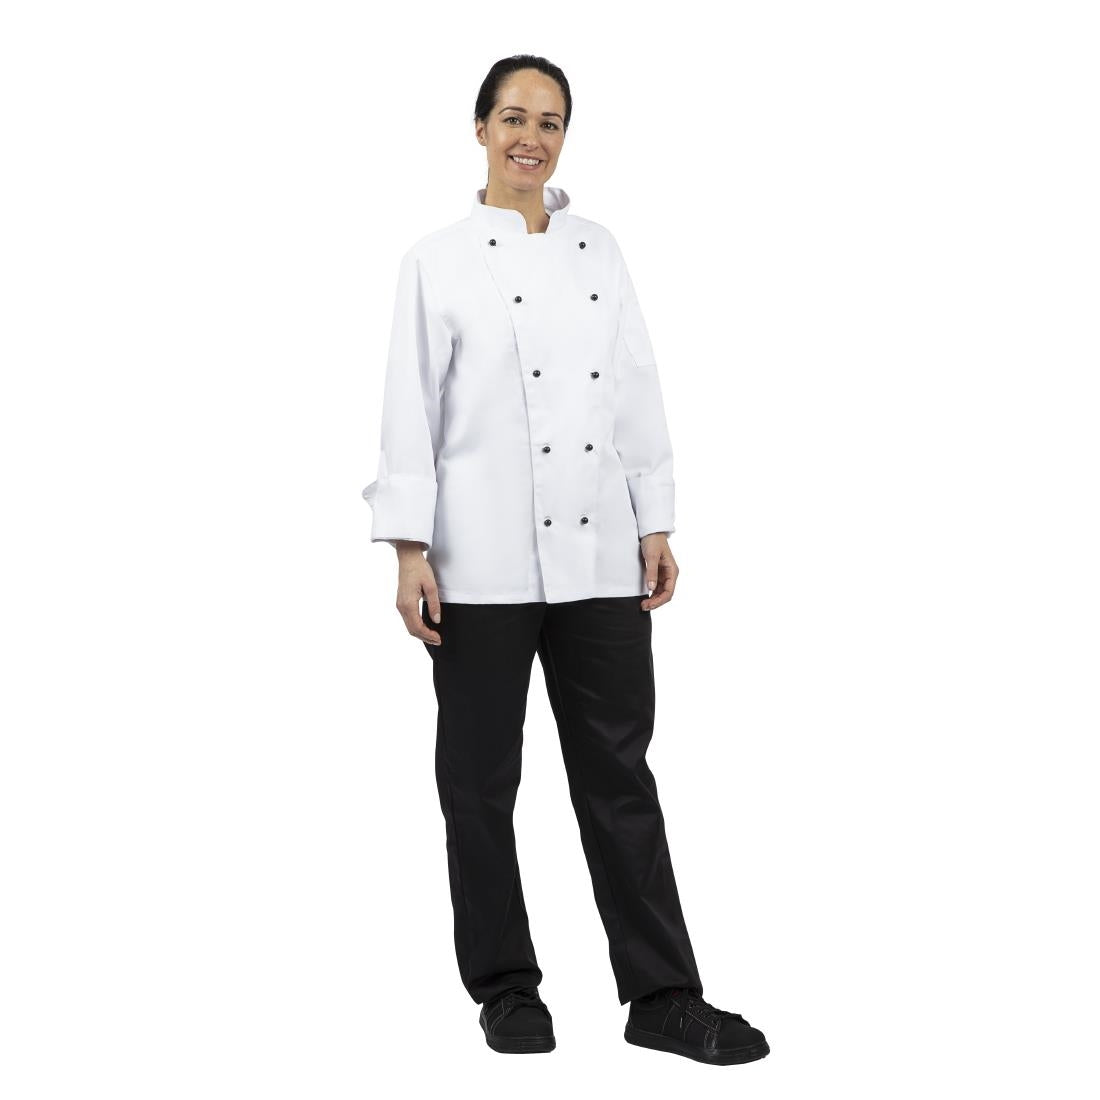 DL710-S Whites Chicago Unisex Chefs Jacket Long Sleeve S